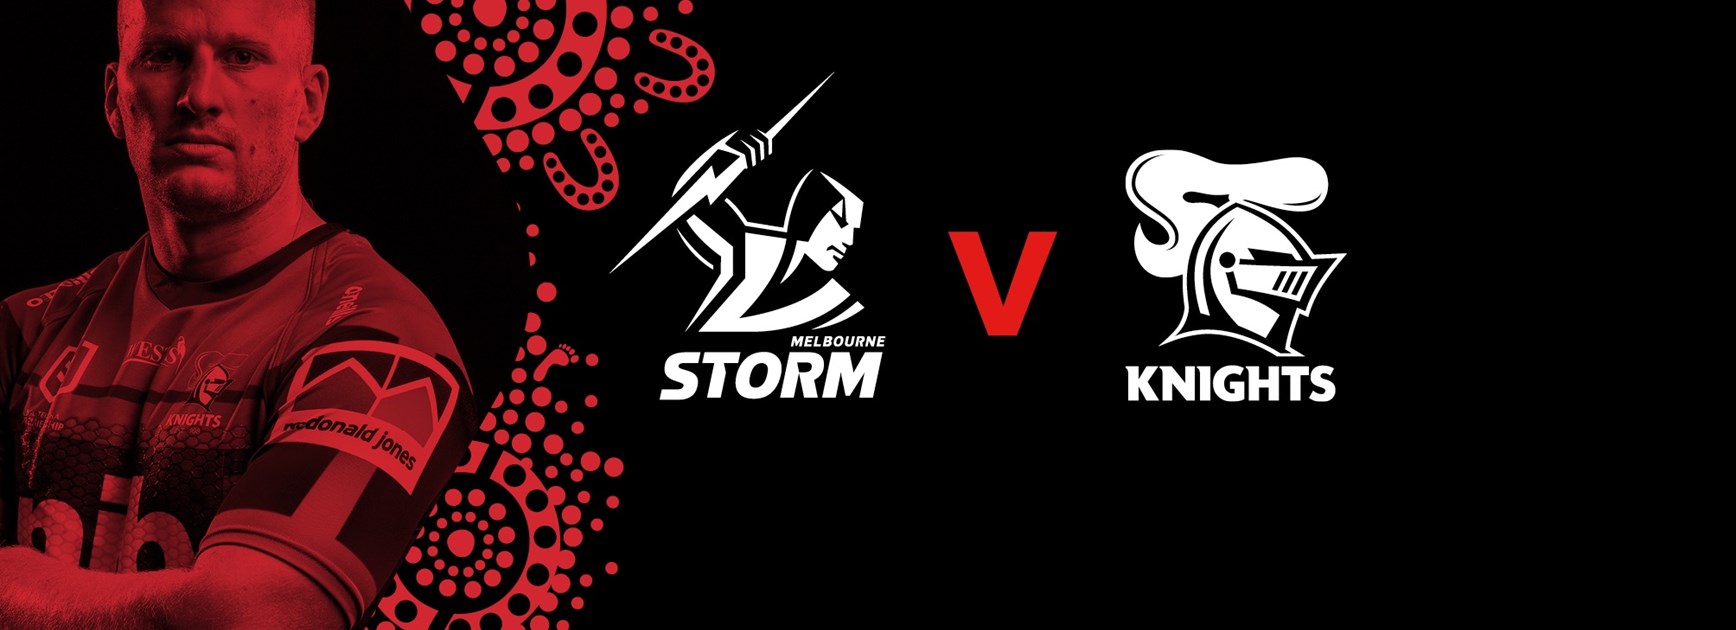 Knights v Storm Round 12 NRL team list